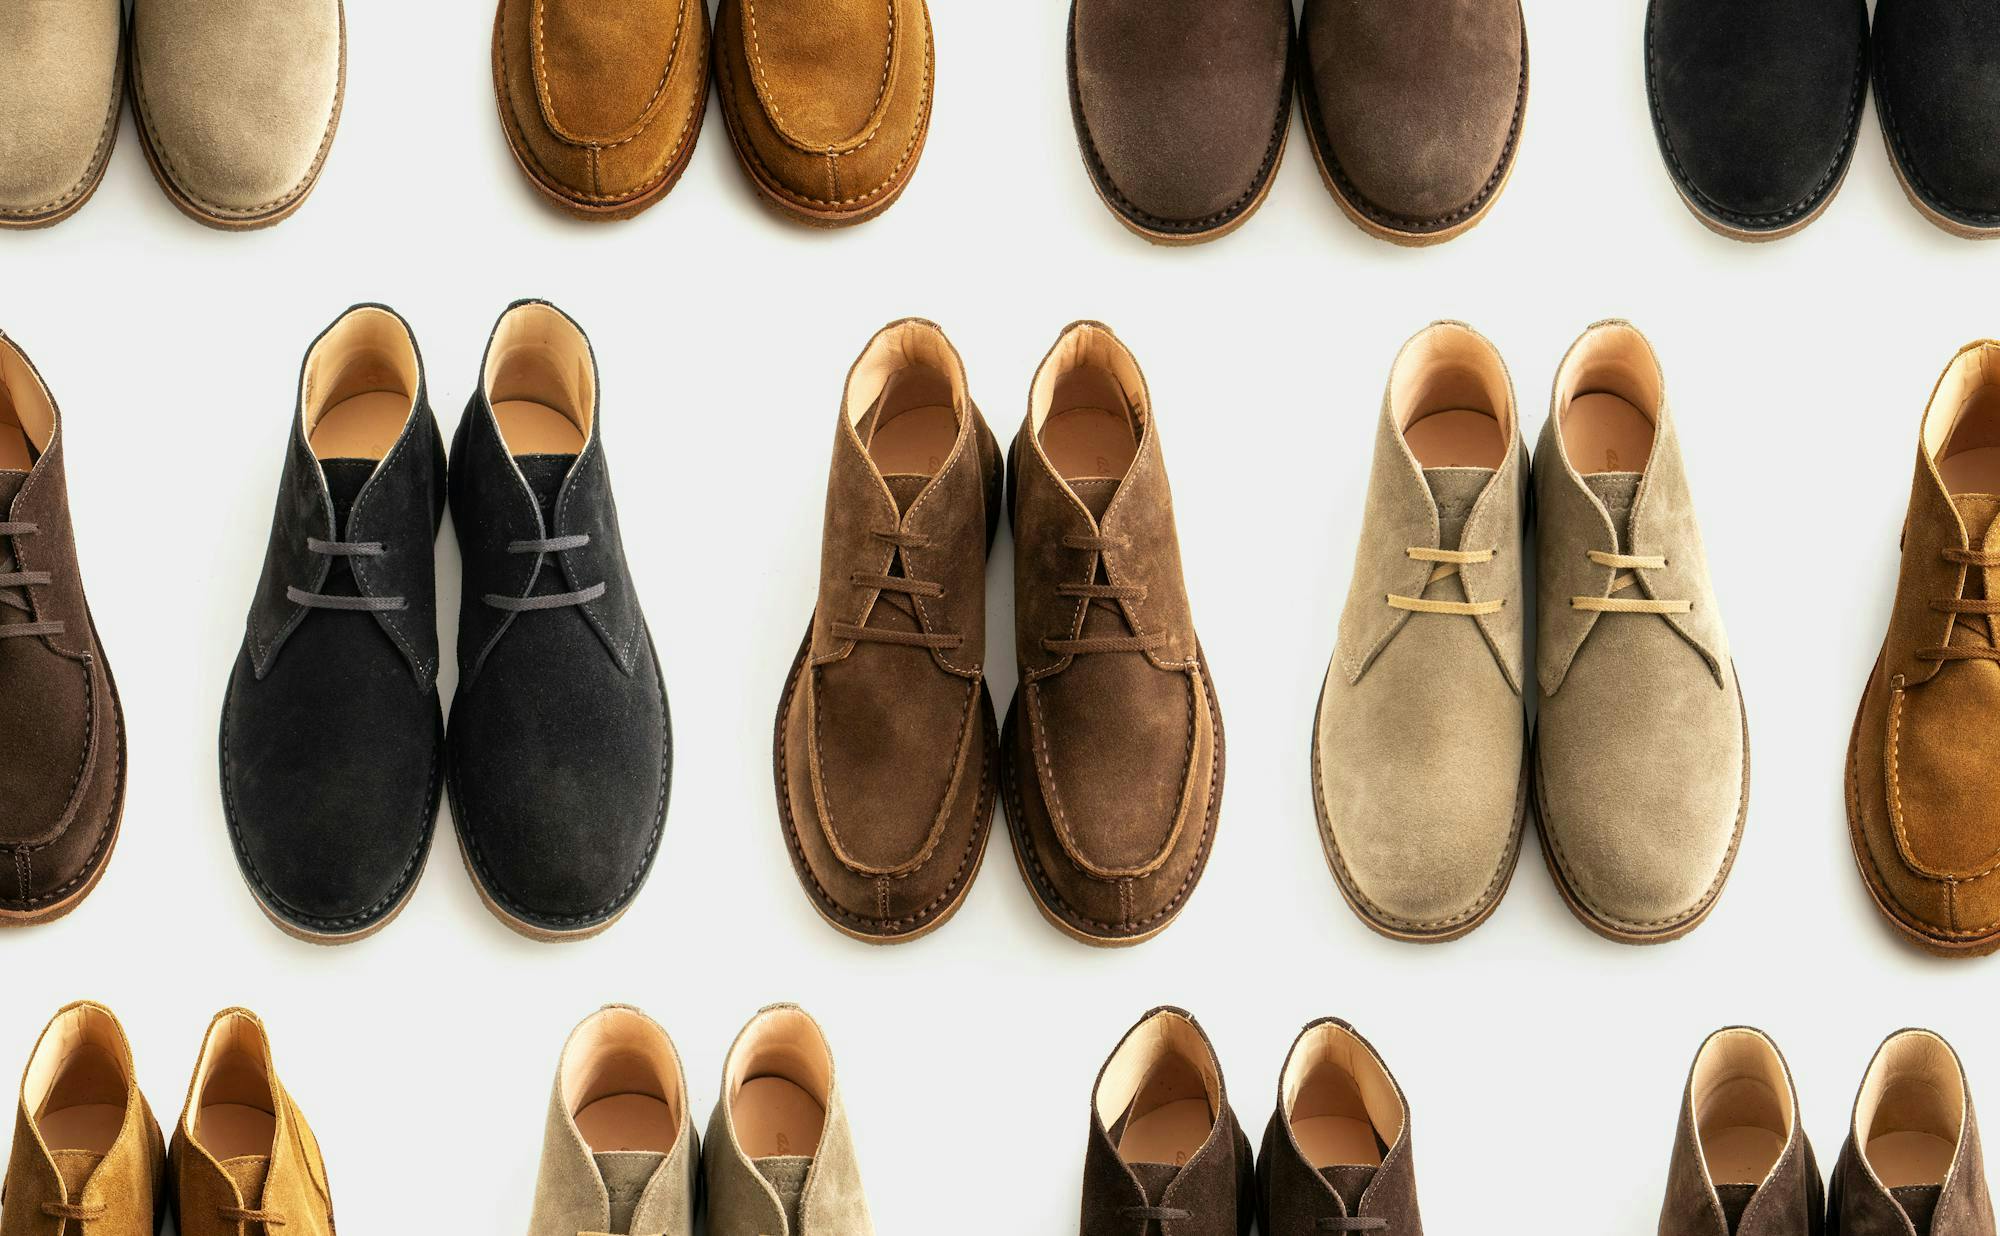 Thirteen pairs of Astorflex chukka boots in different suedes.